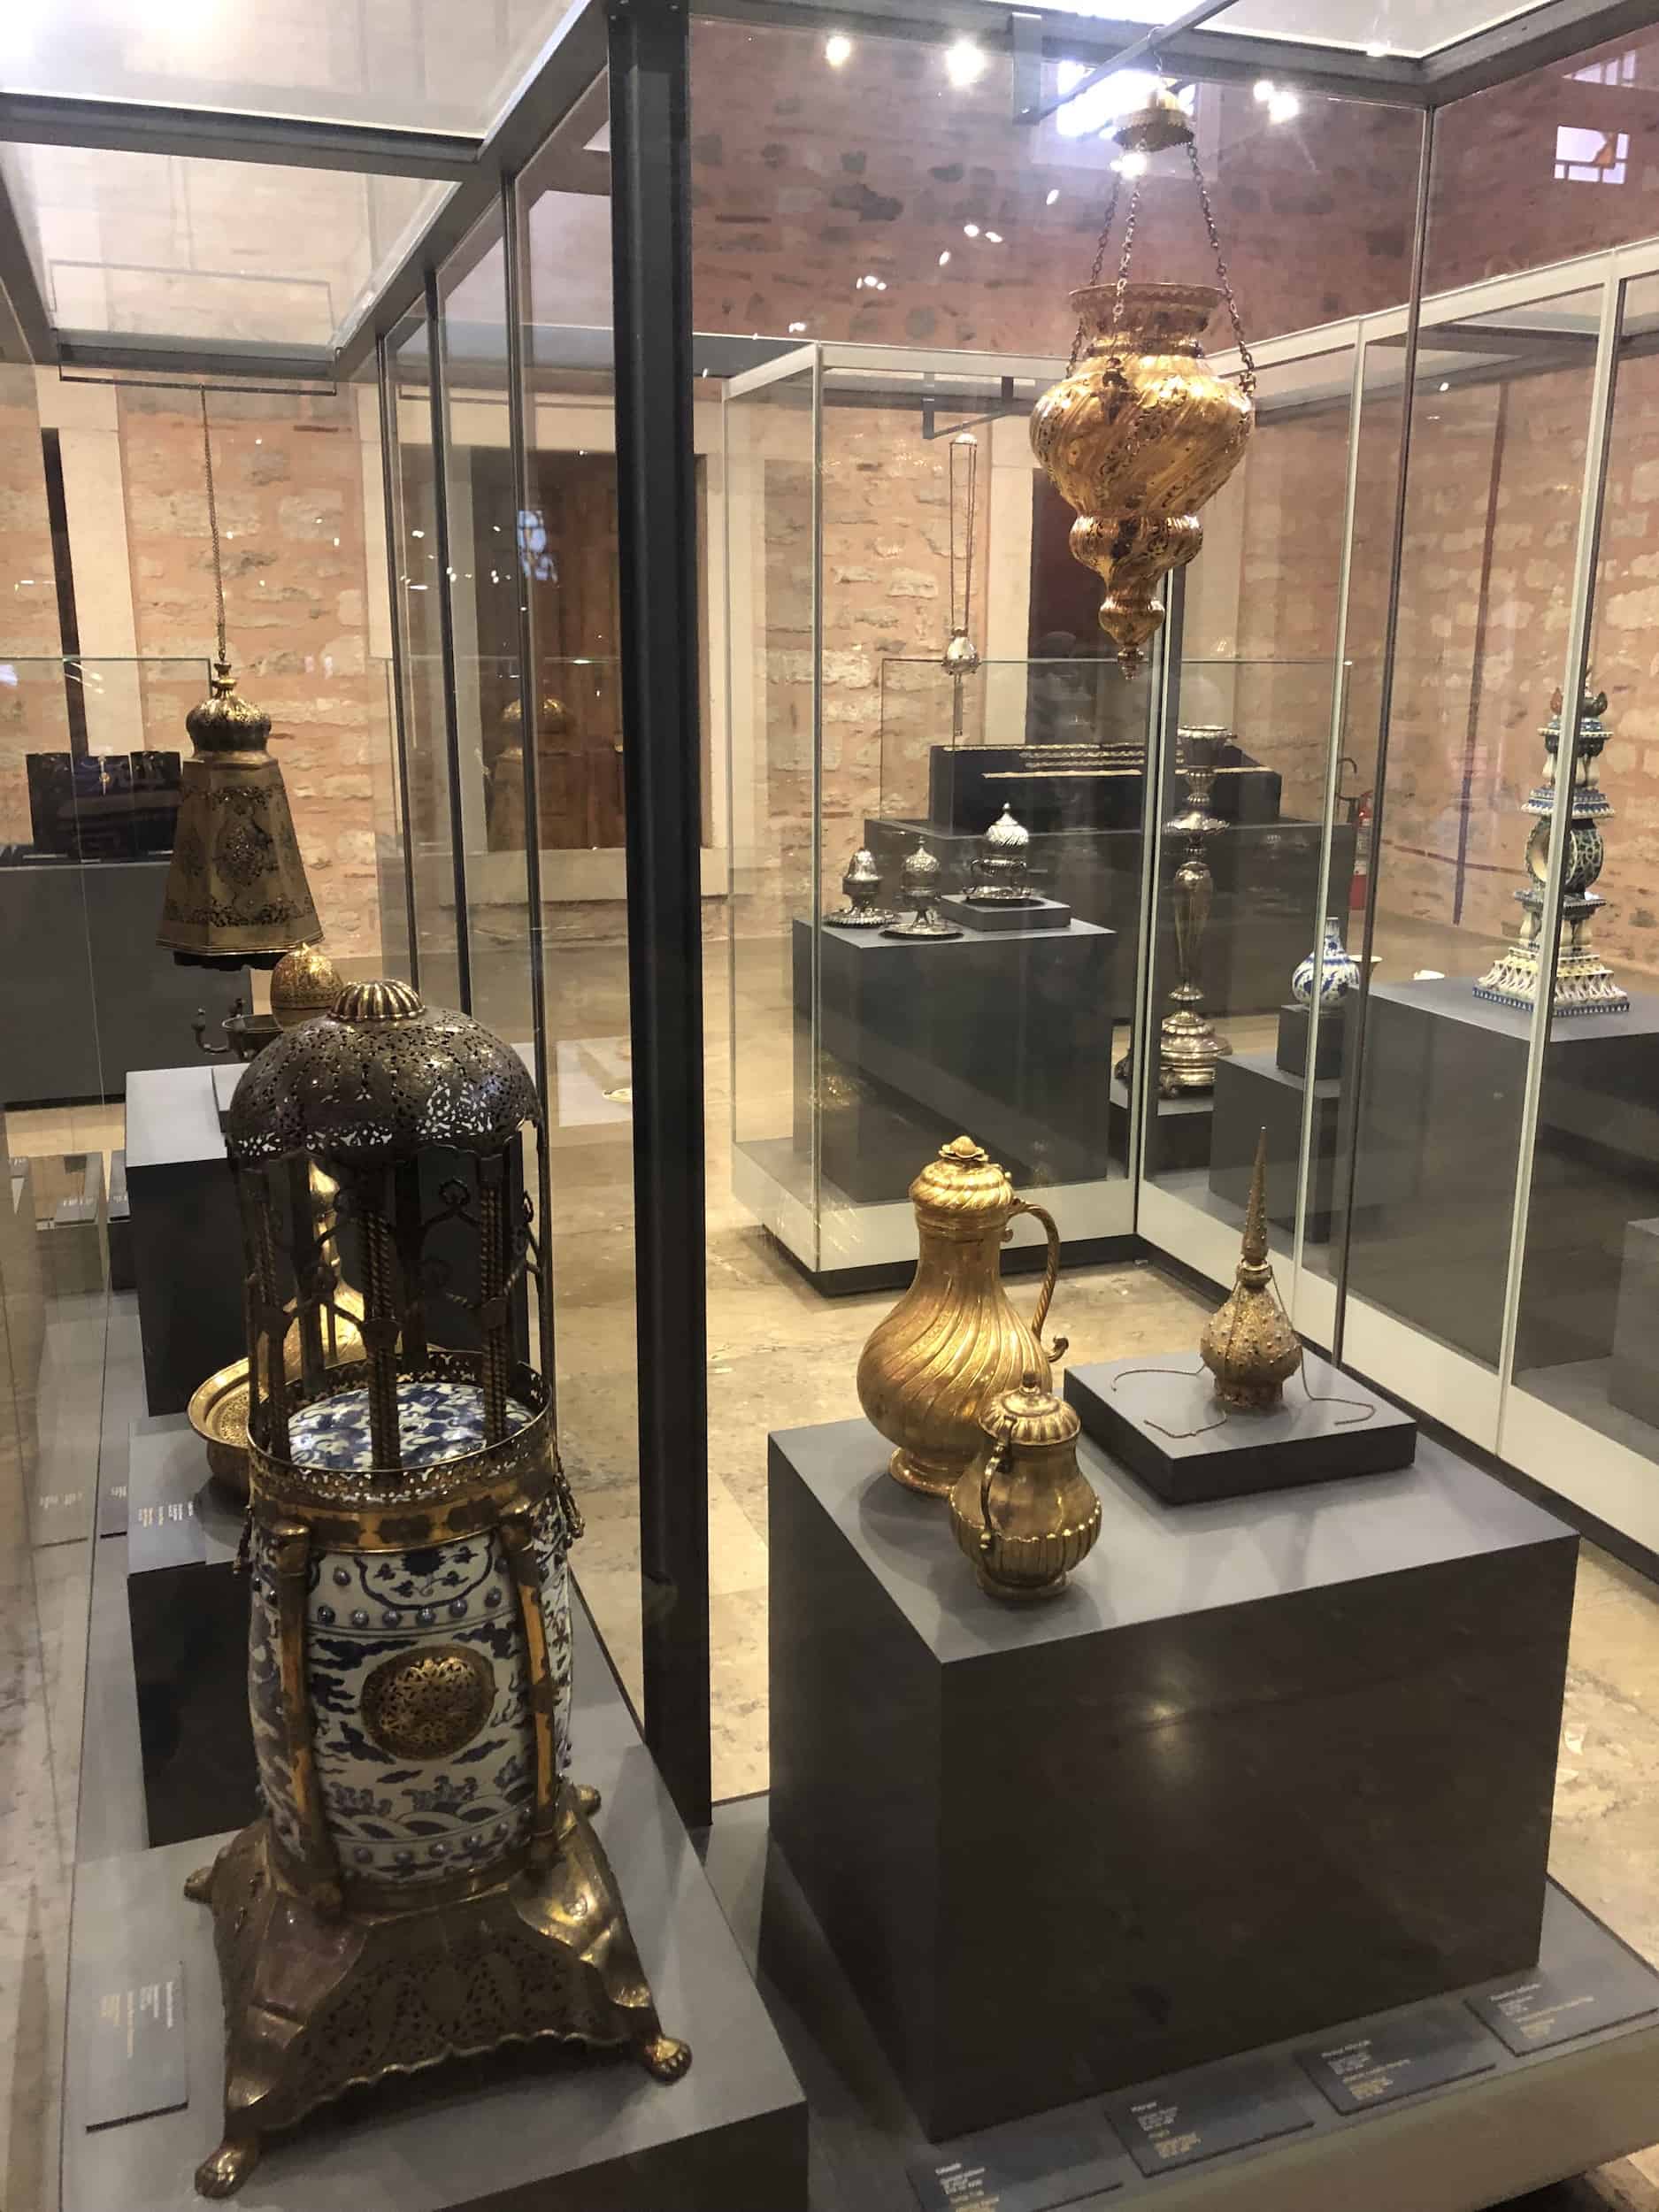 Ottoman period artifacts